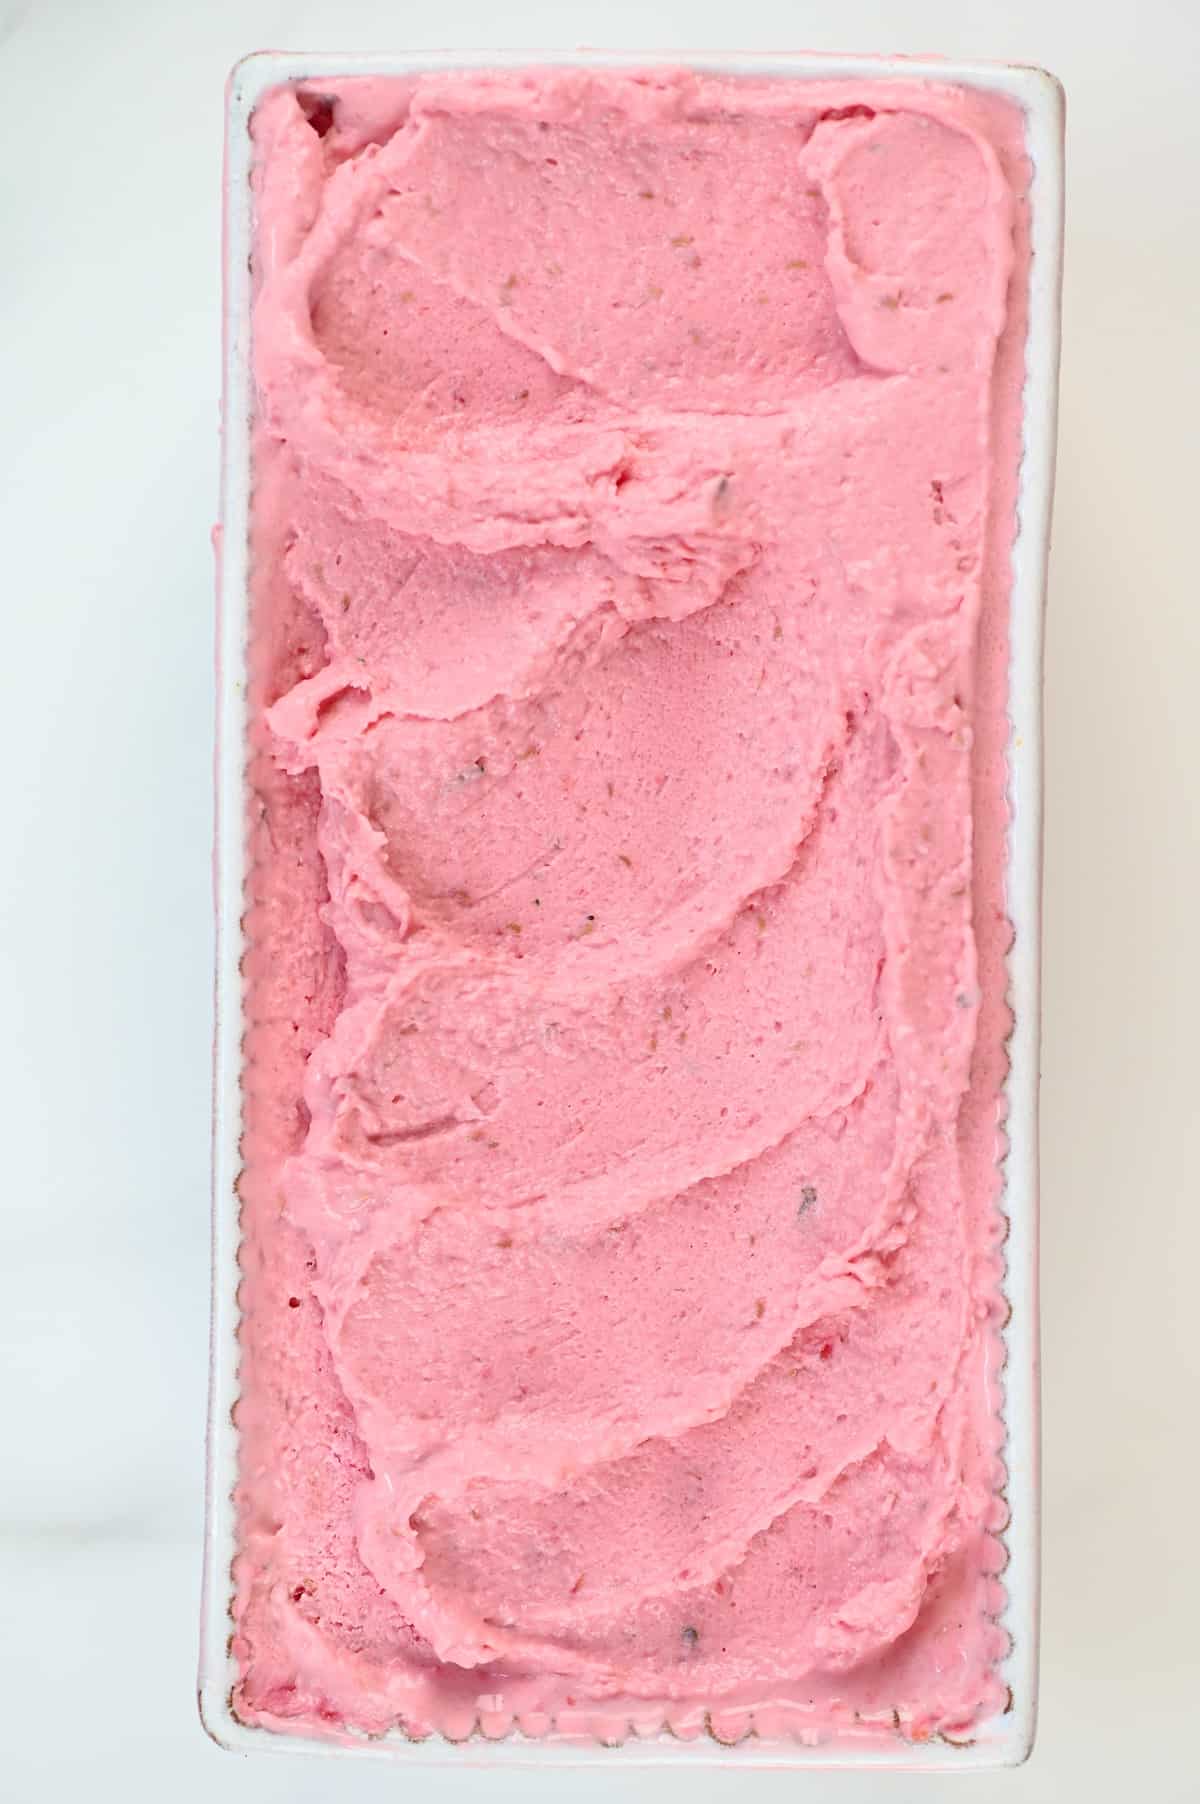 creamy homemade Raspberry Ice Cream in a glass tub